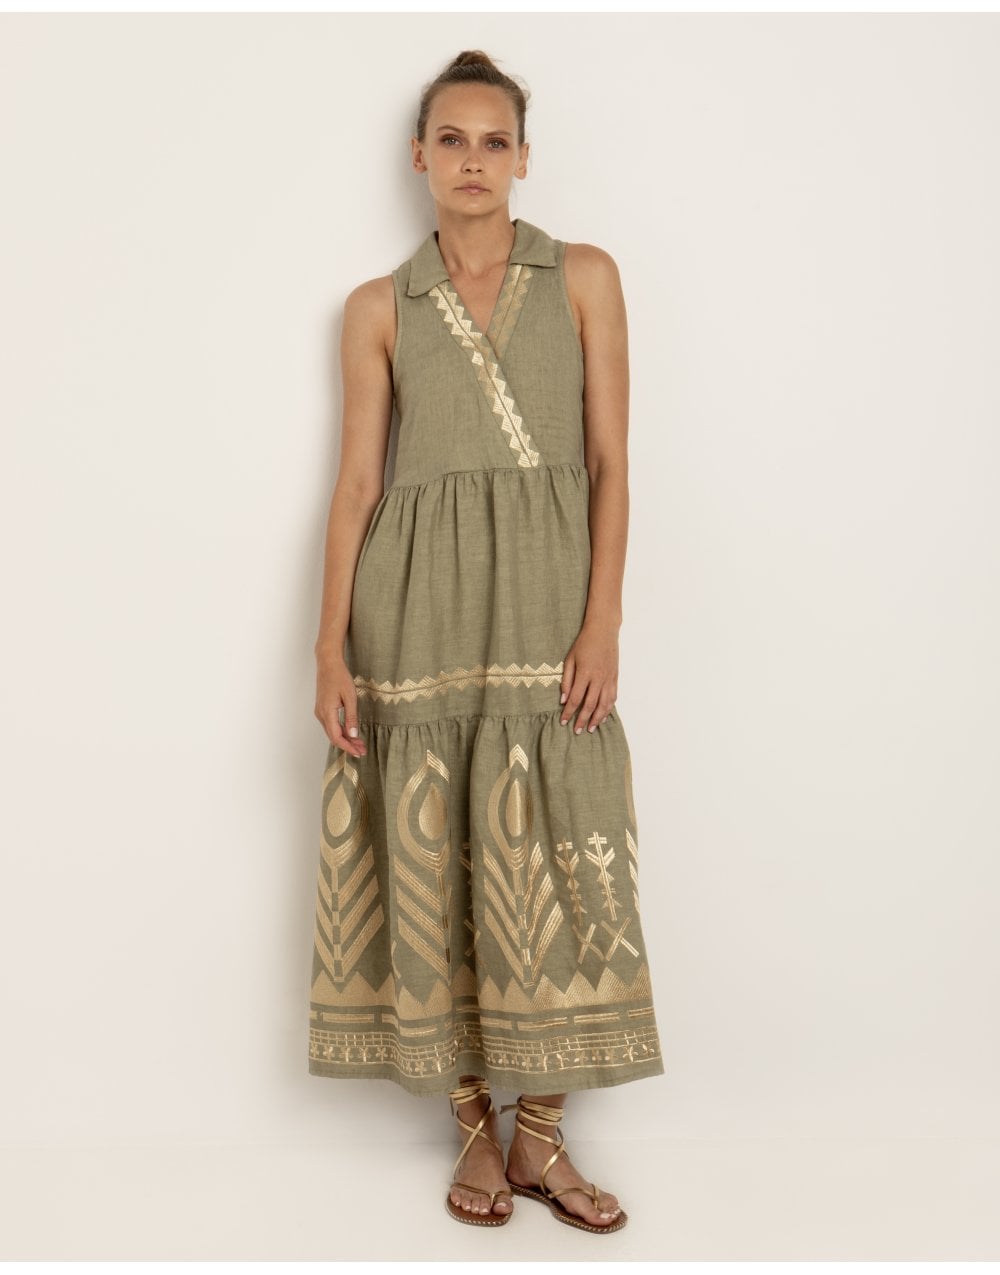 Greek Archaic Kori Greek Archaic Kori Feathers Cross Over Sleeveless Dress Col: Tea Gold Size XS